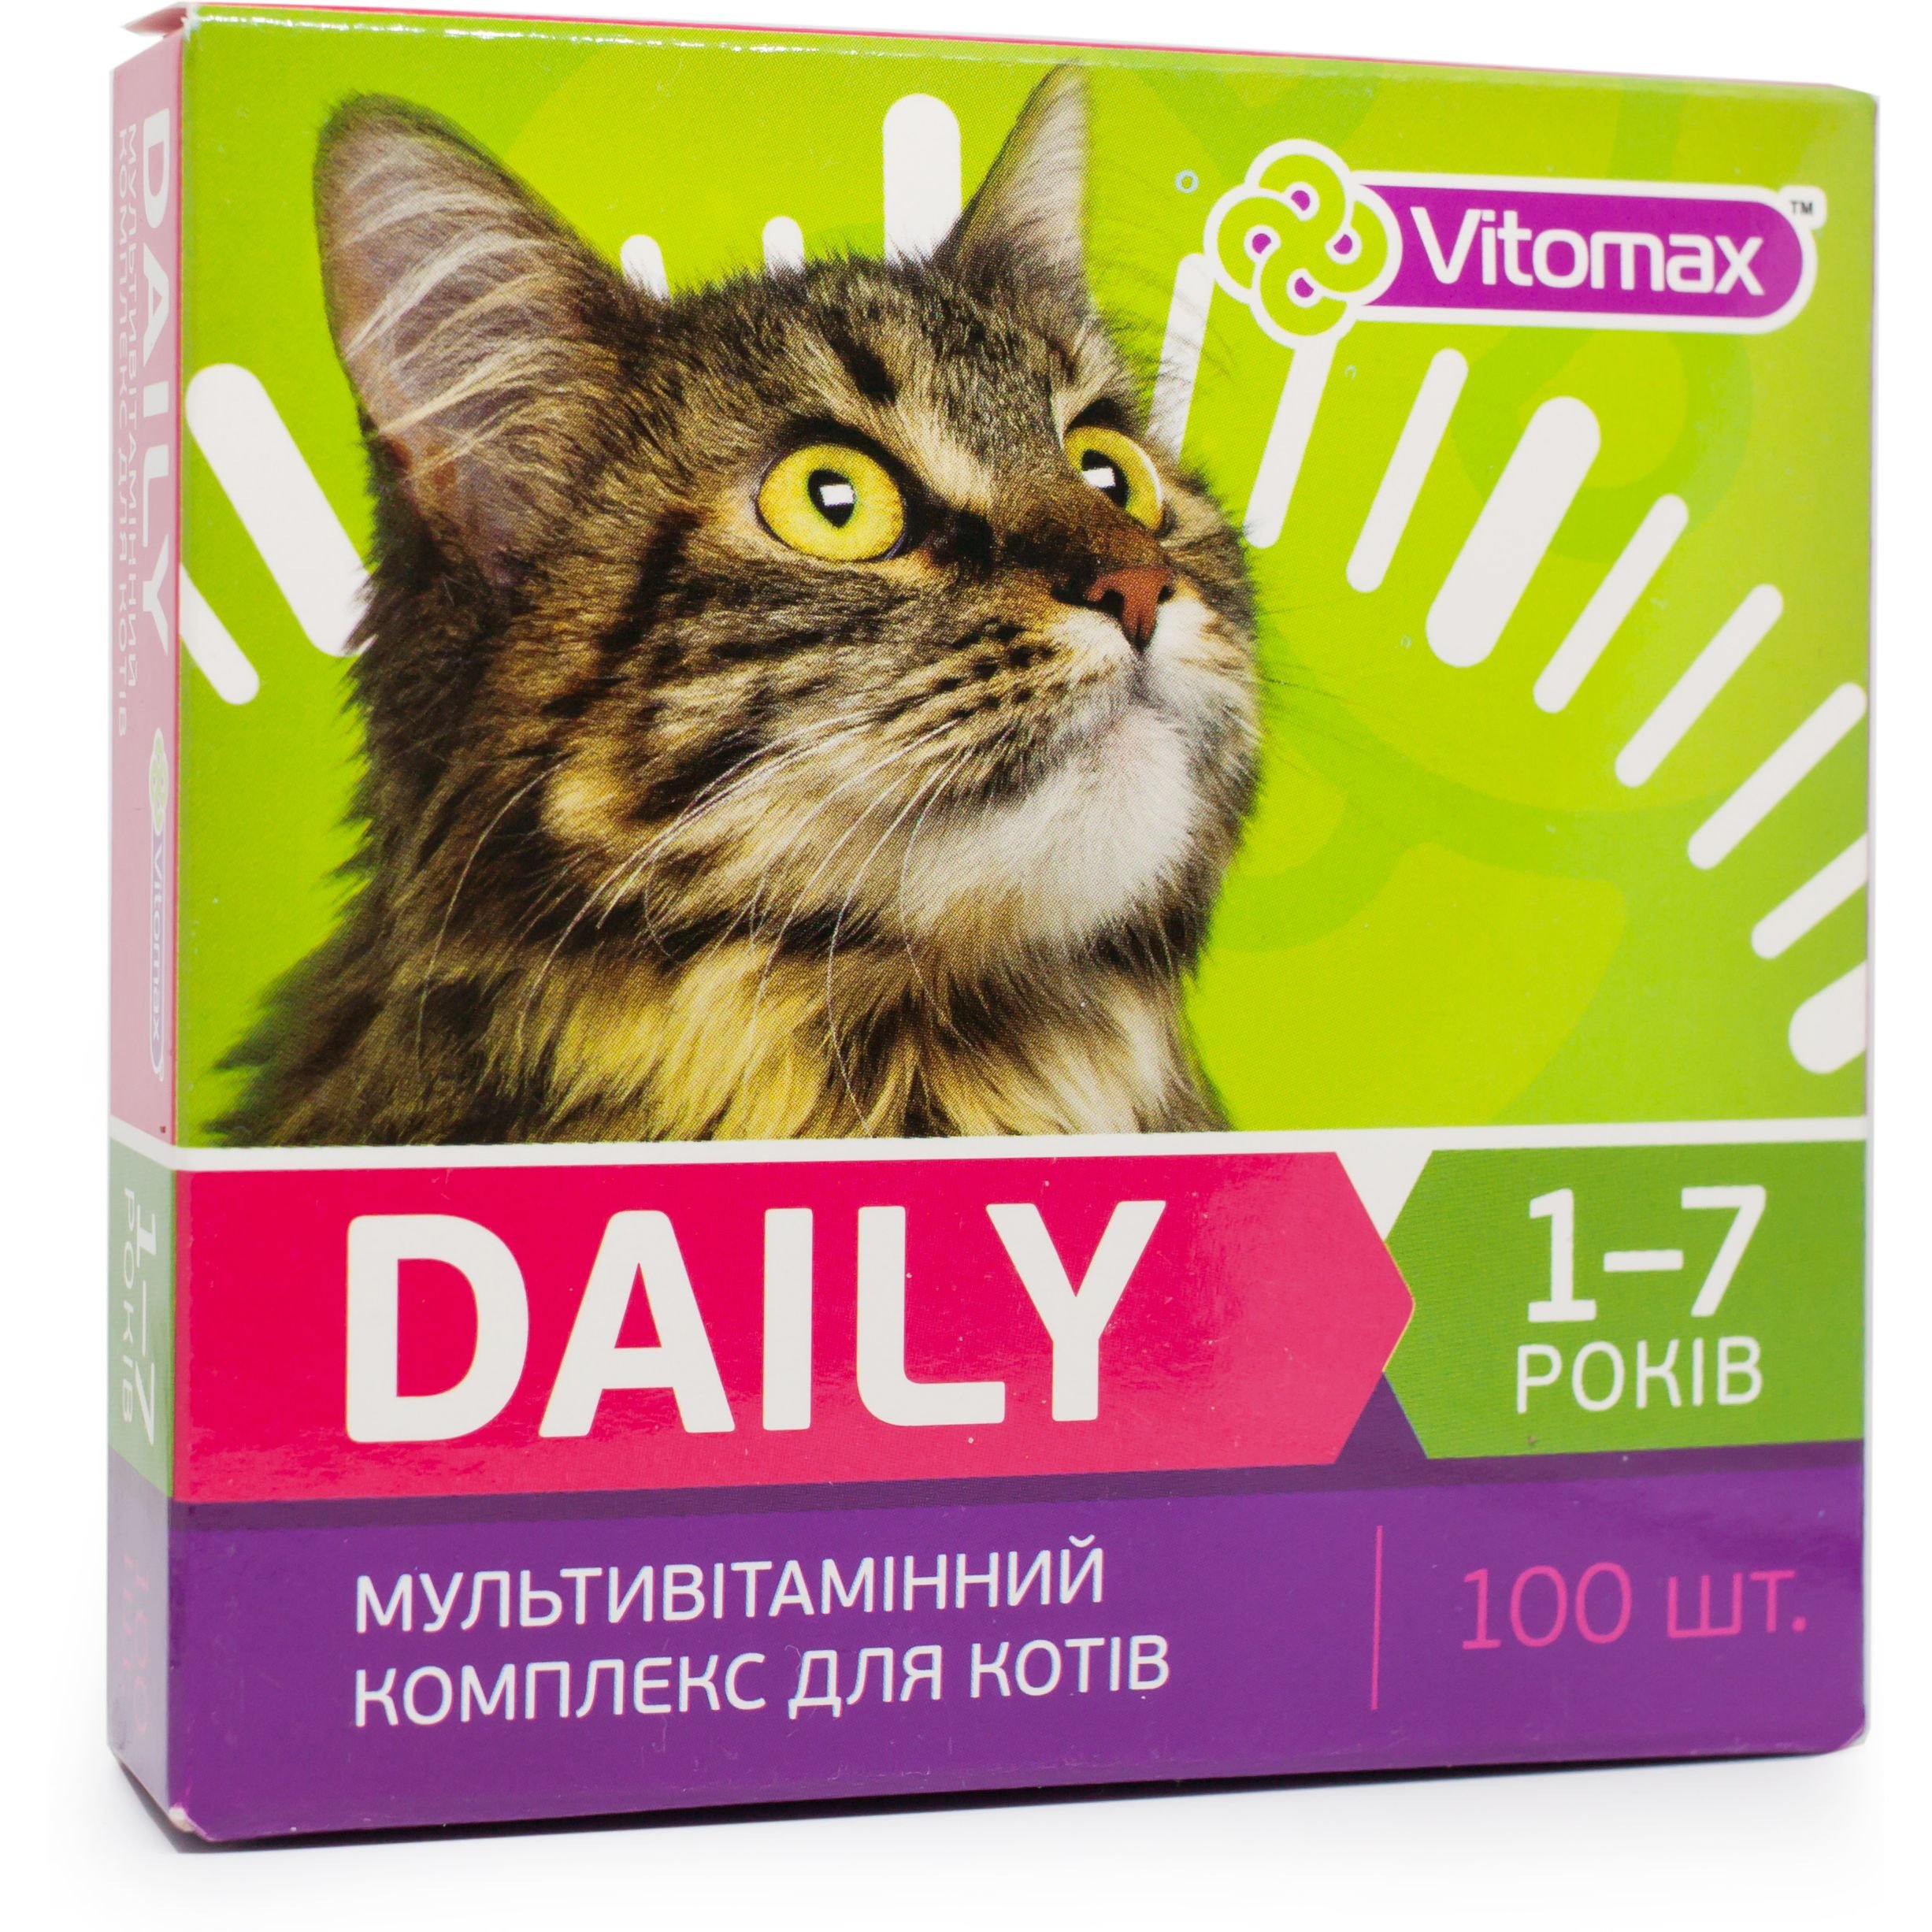 Мультивитаминный комплекс Vitomax Daily для кошек 1-7 лет, 100 таблеток - фото 1